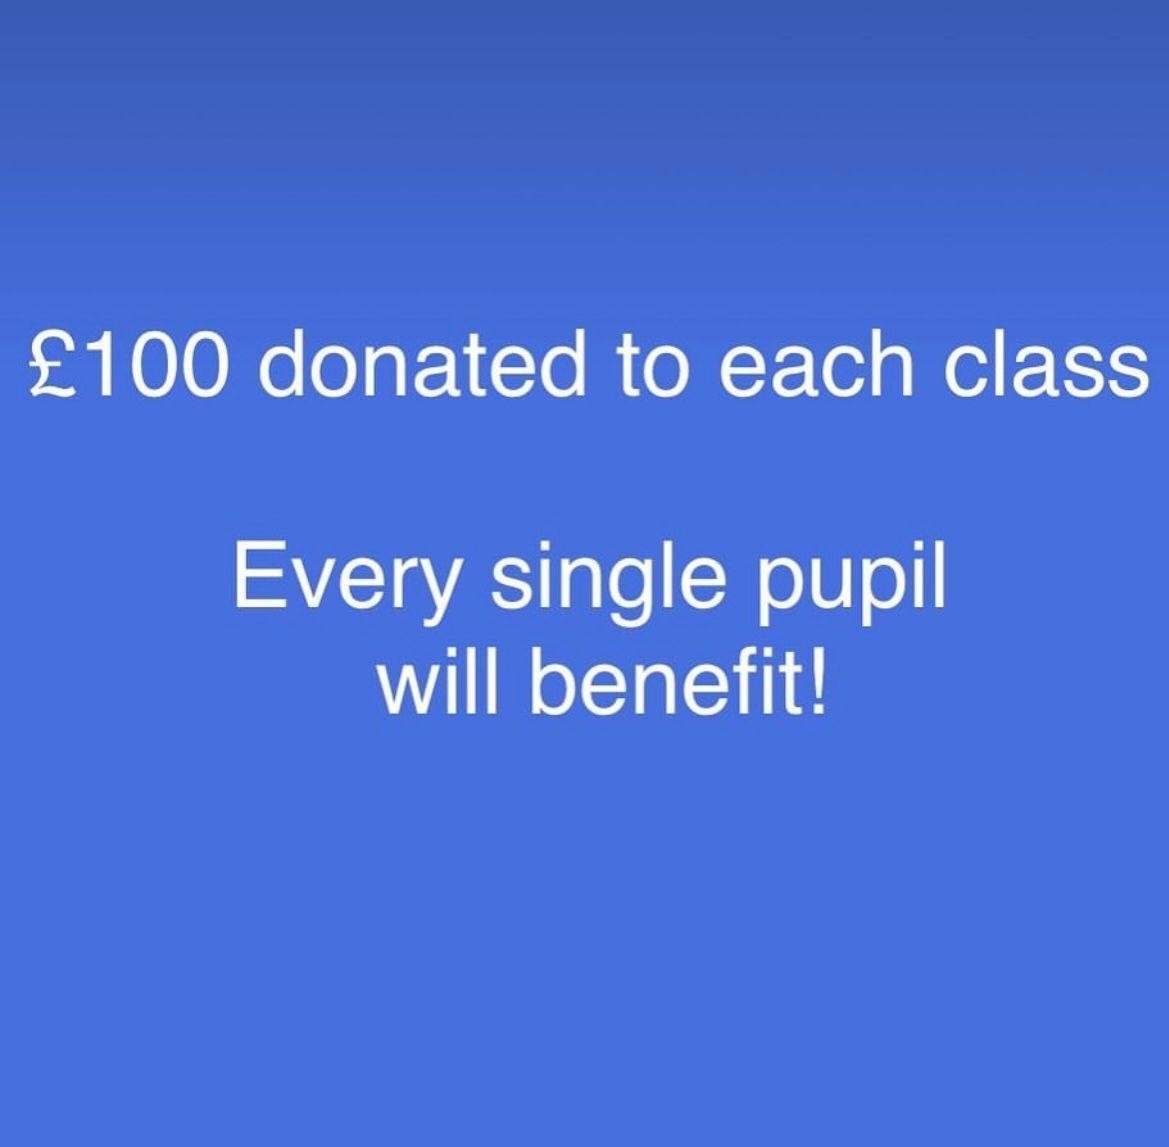 Every class benefits